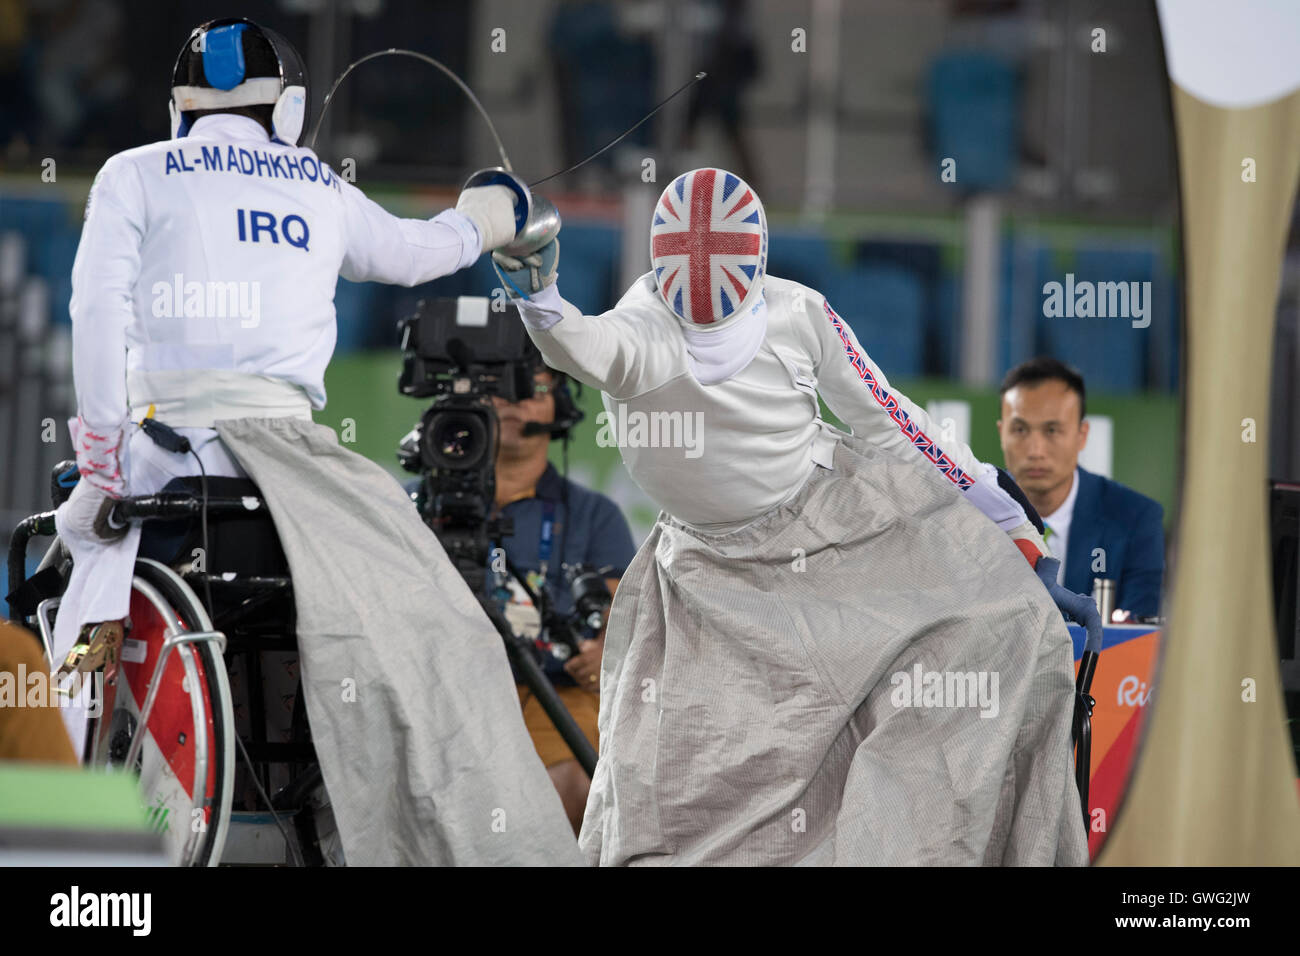 Piers Gilliver of Great Britain punktet gegen Zainulabdeen Al-Madhkhoori des Irak in Degen Kategorie A bei den Paralympics 2016 Stockfoto